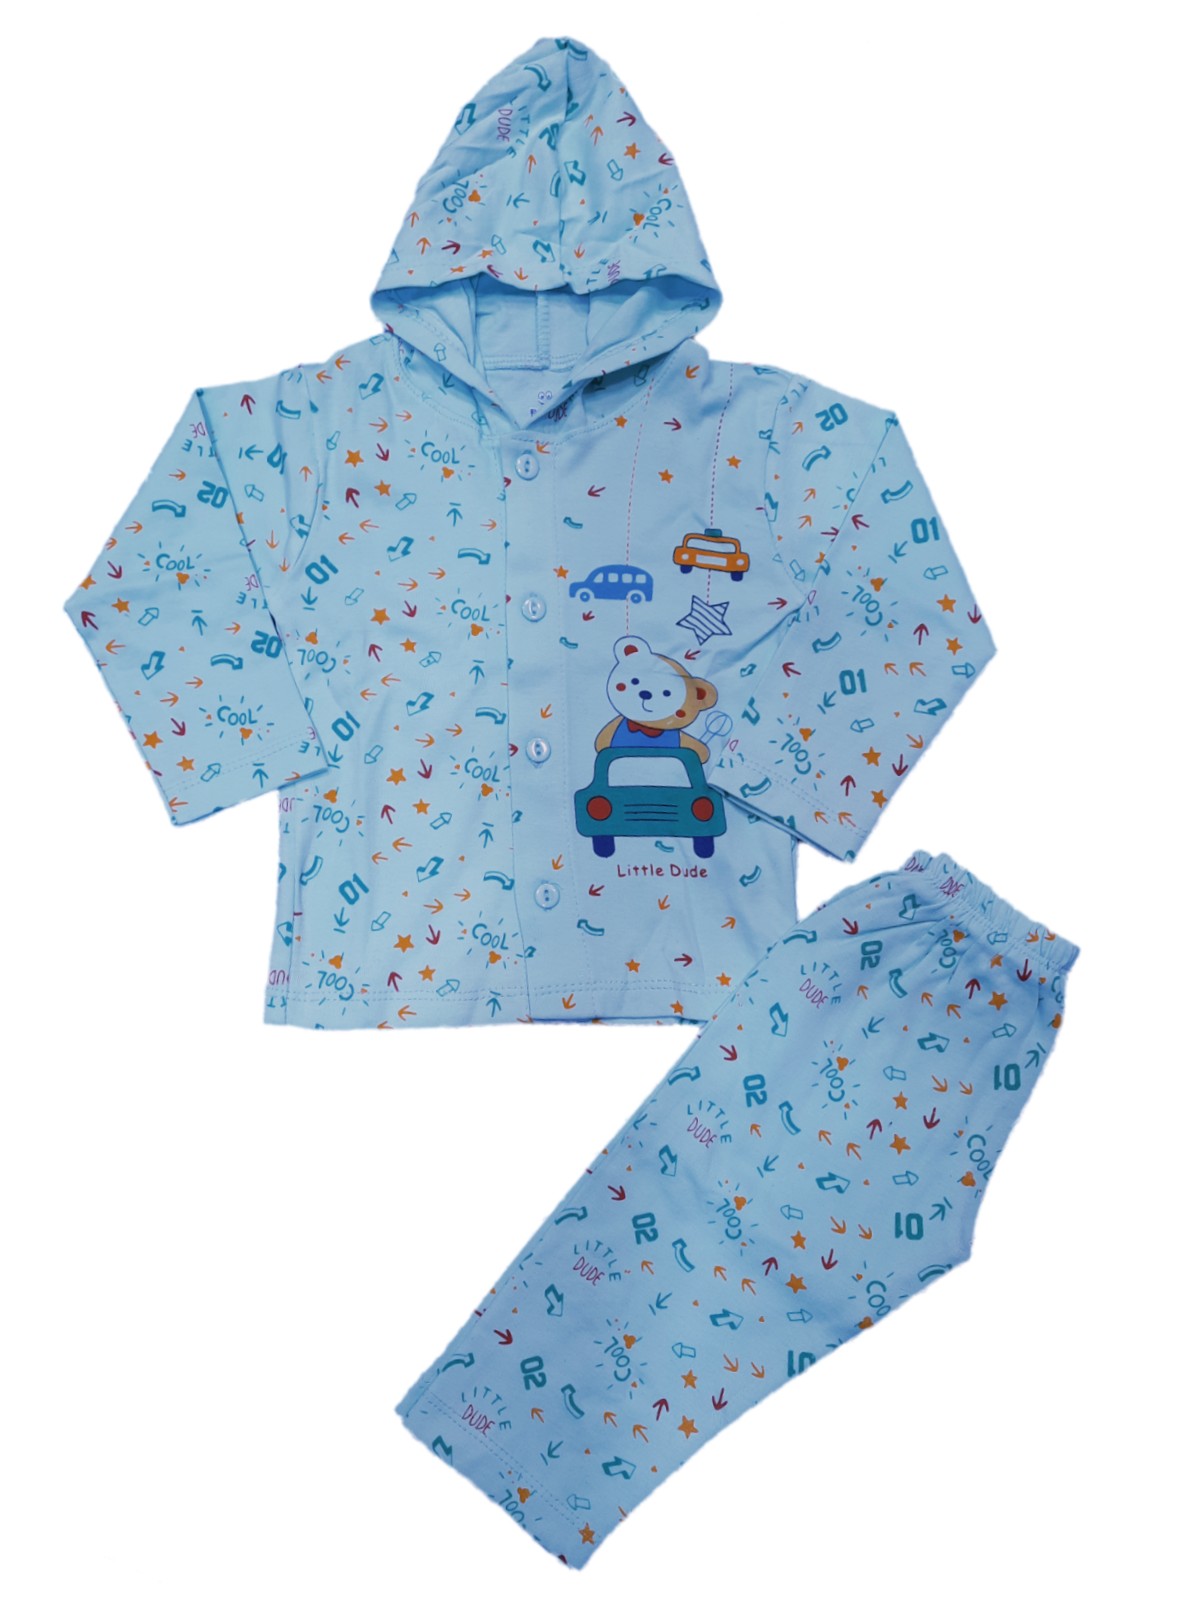 New Born Infant Payjama Set -D2151-1